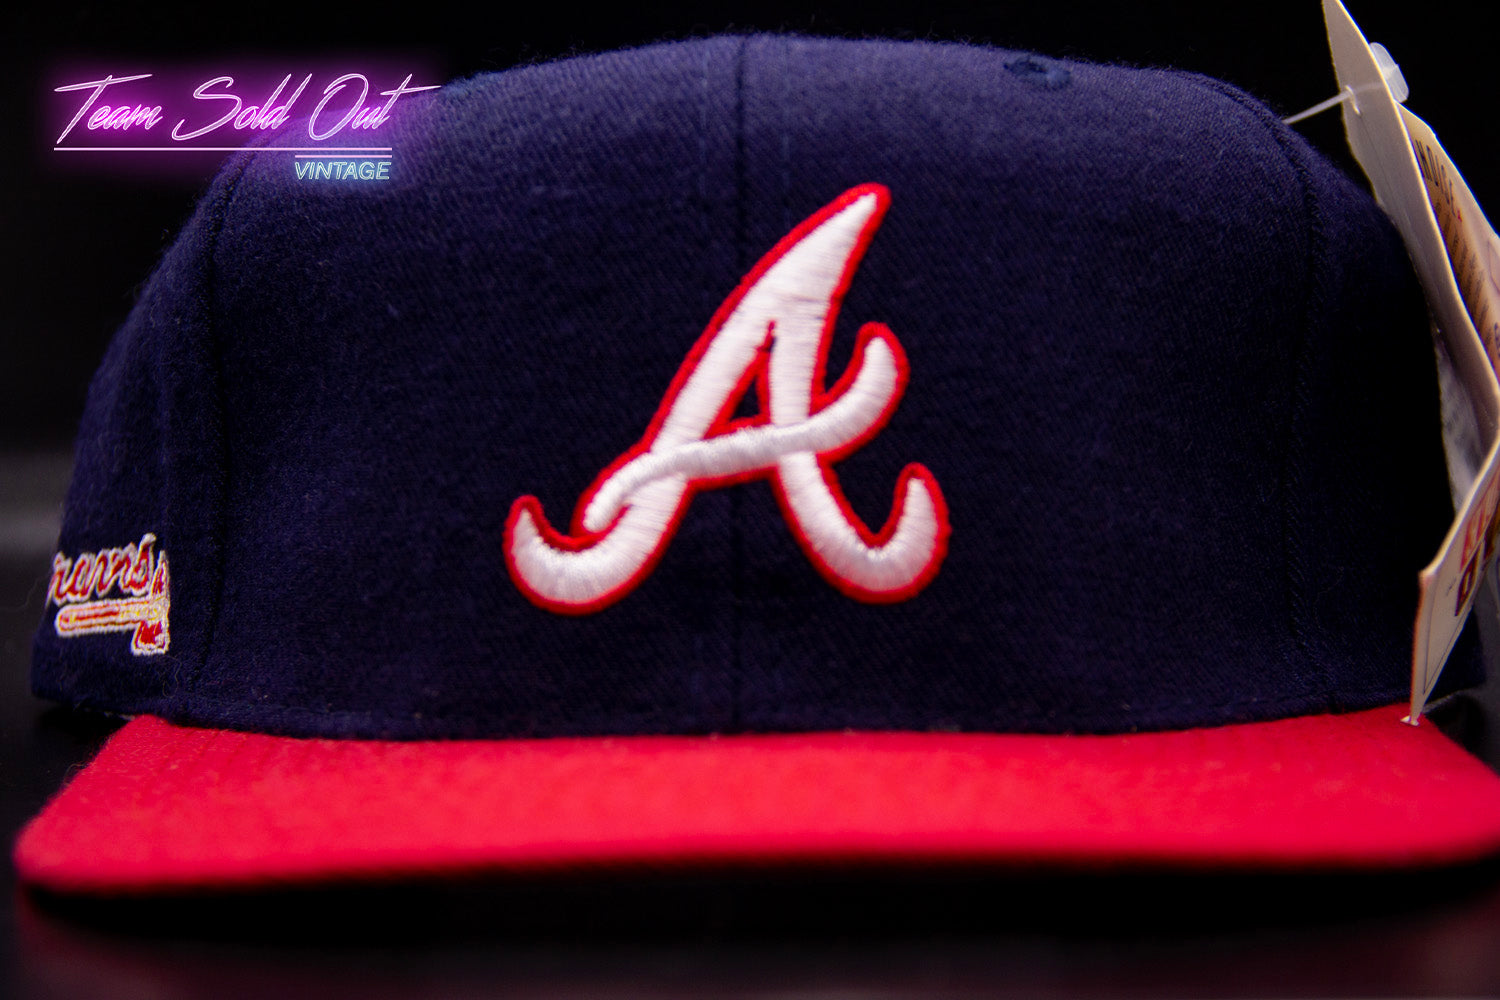 Atlanta Braves American Needle Cooperstown Vintage Fitted Cap Hat